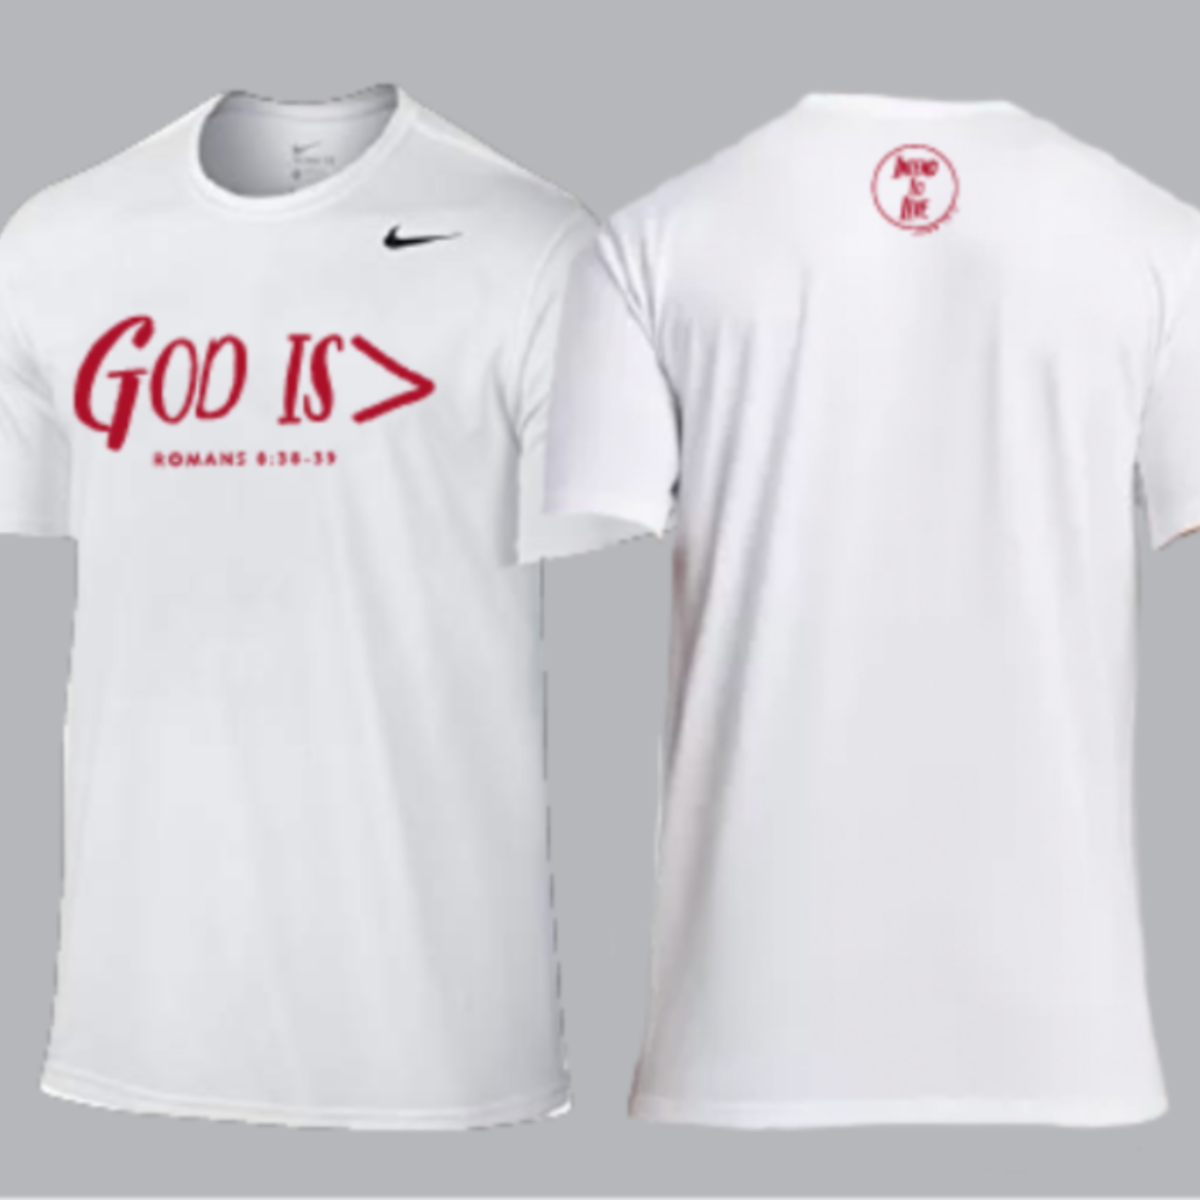 God is > Nike Running Shirt